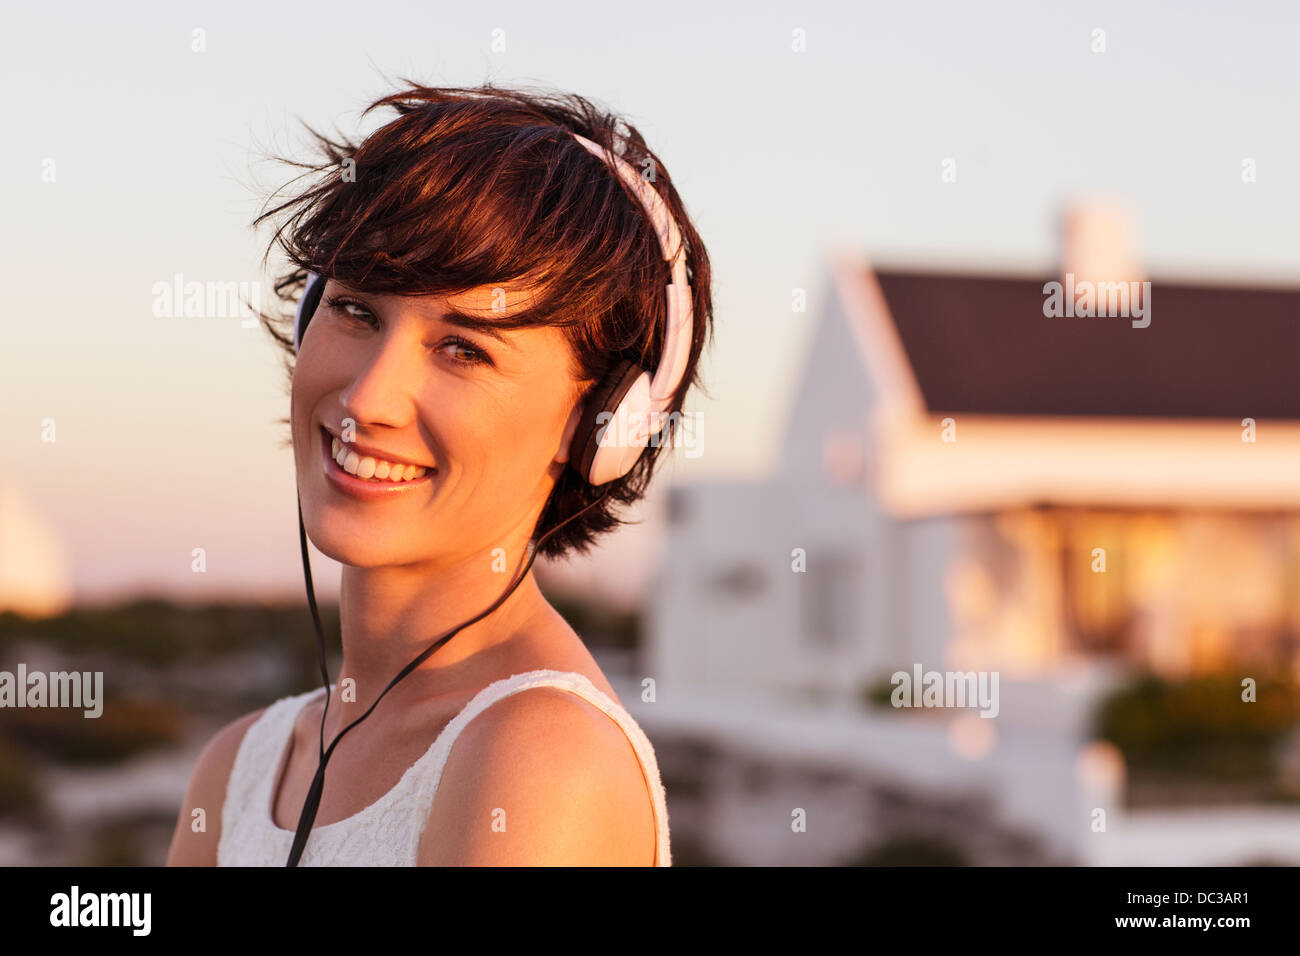 Portrait of smiling woman wearing headphones Stock Photo